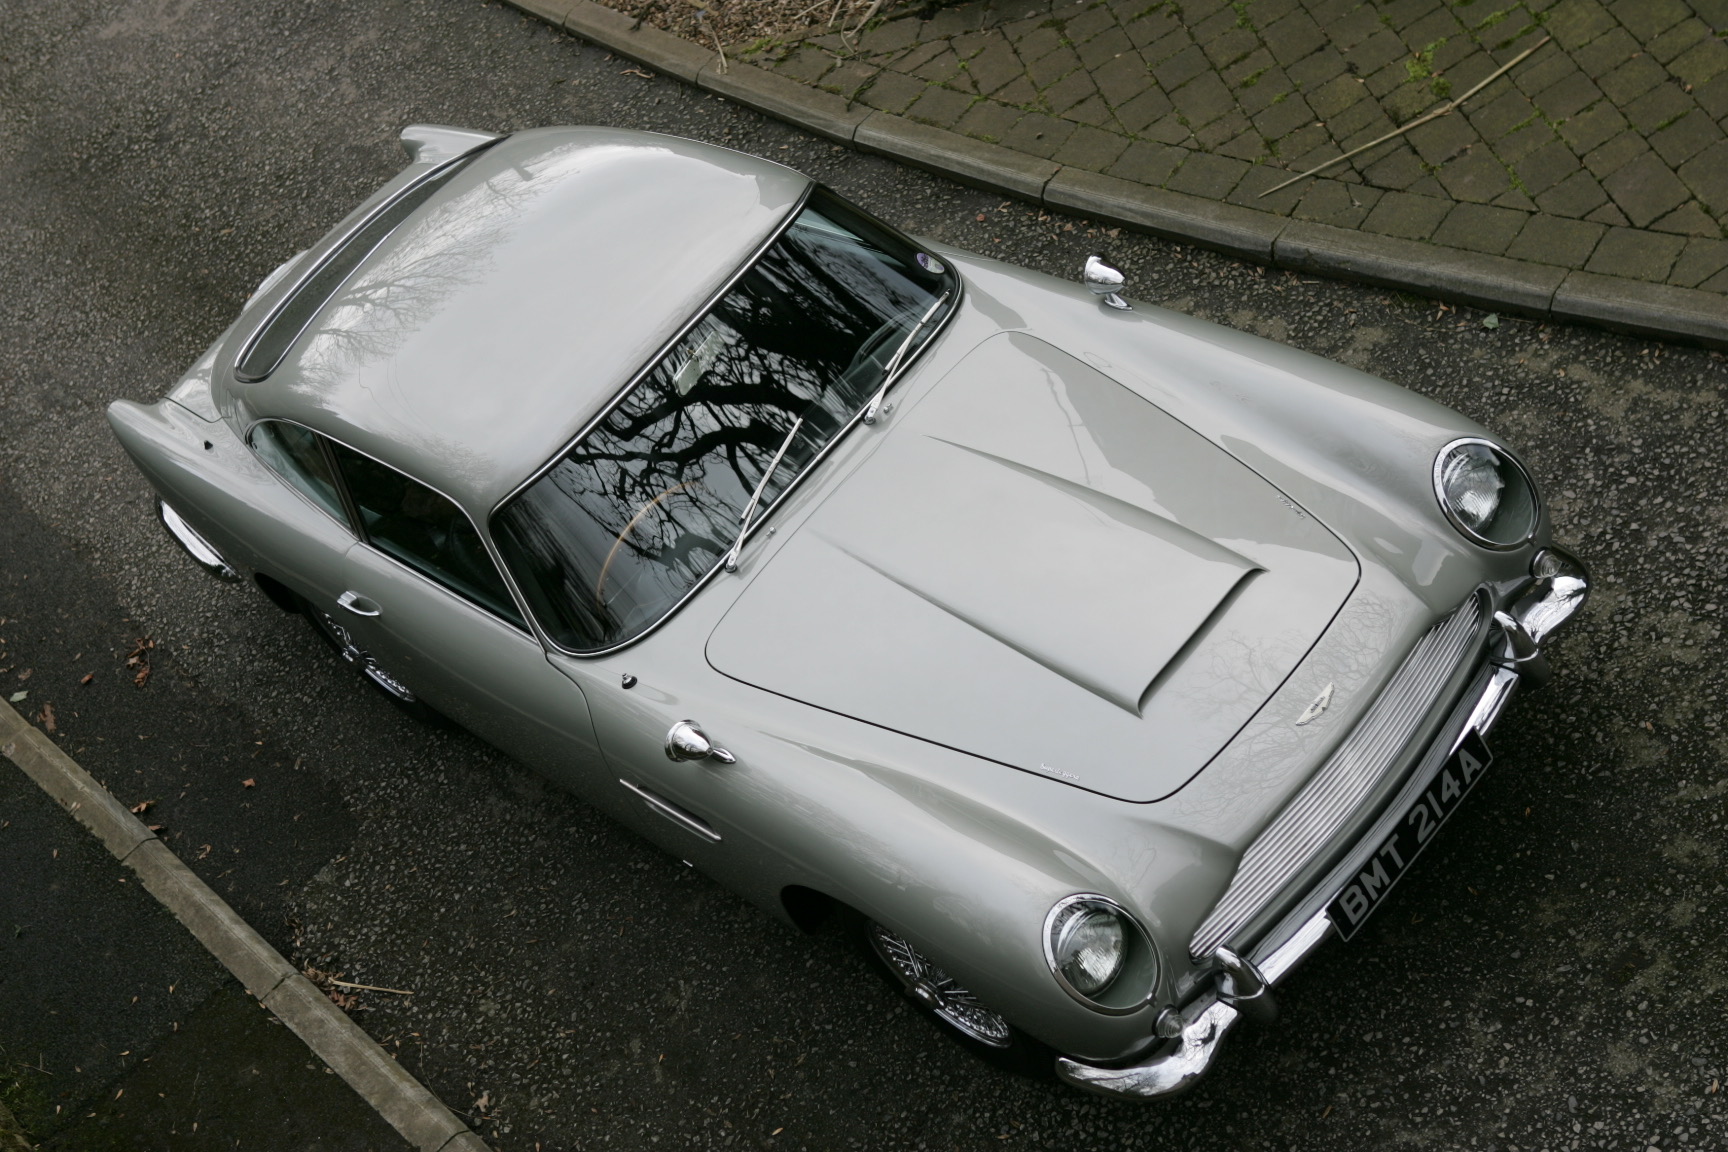 James Bond, James Bond’s ‘GoldenEye’ DB5 going to auction, ClassicCars.com Journal